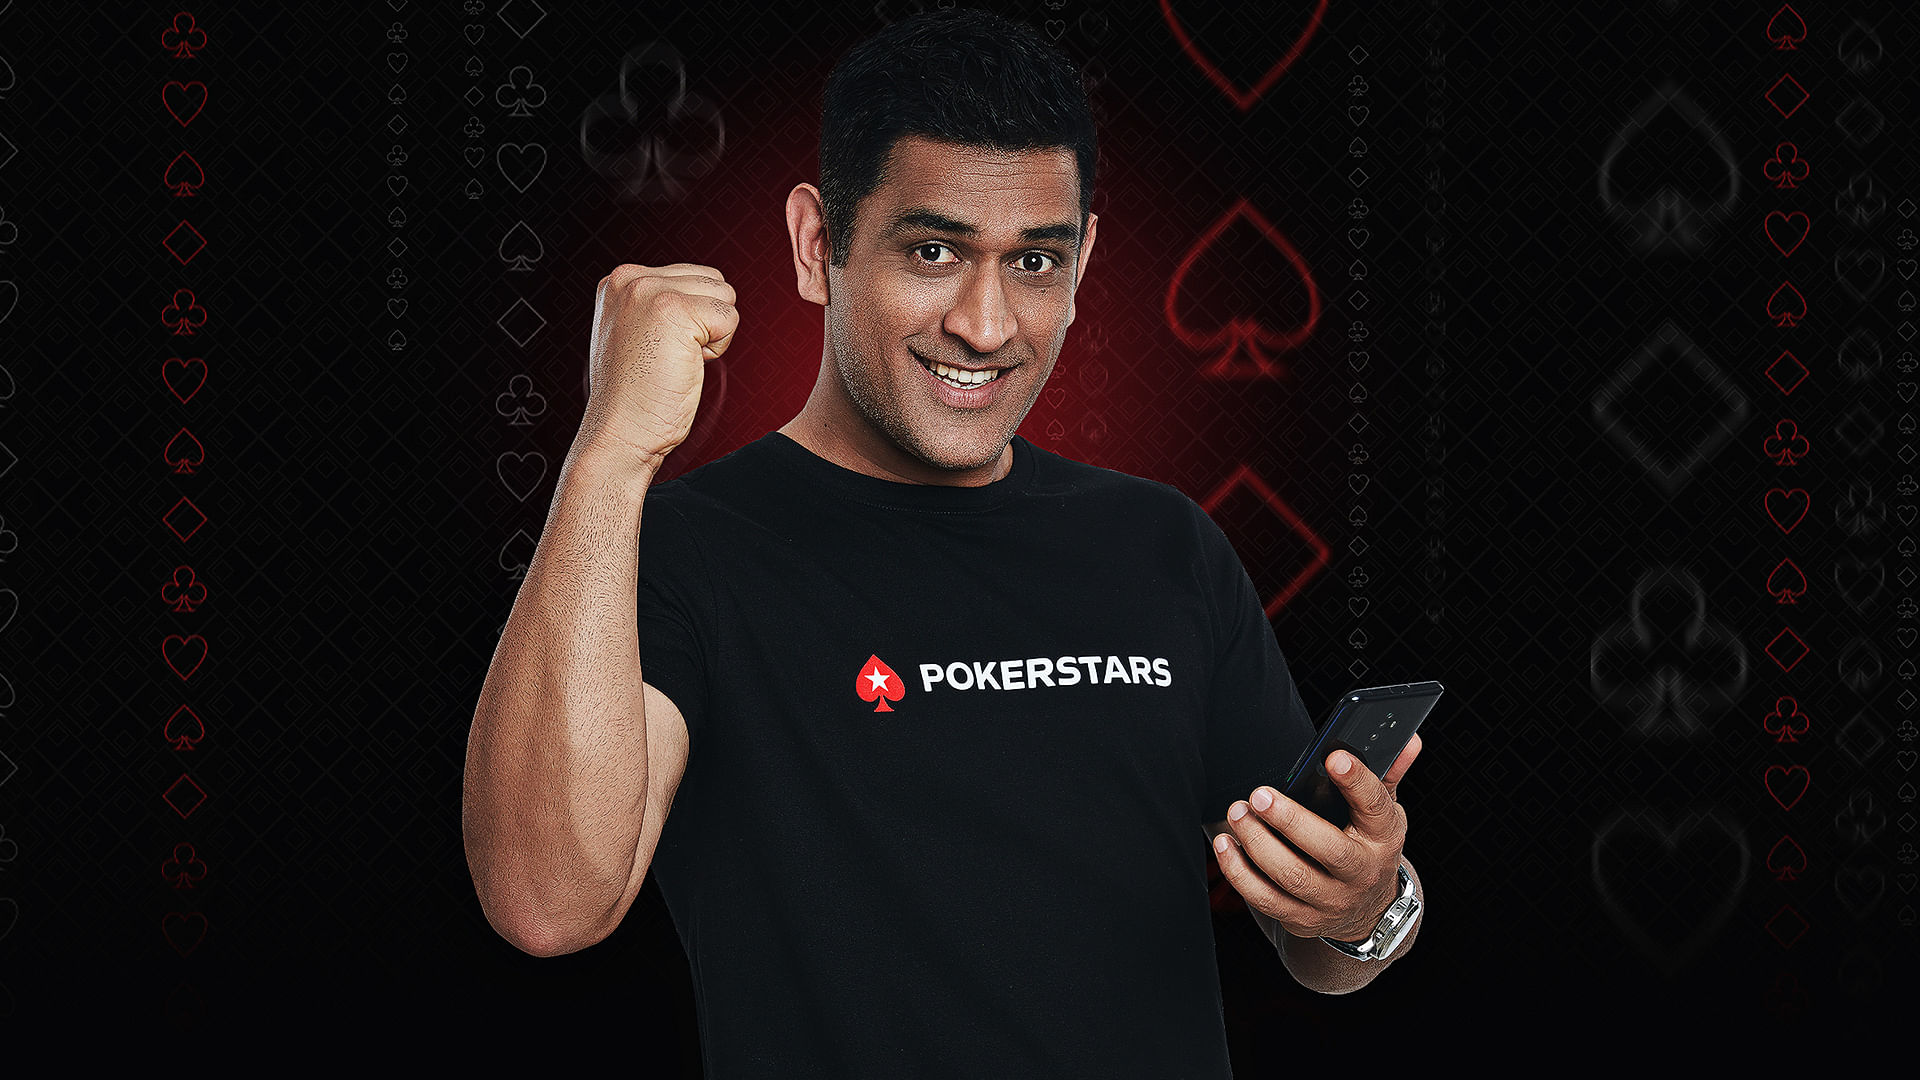 Dhoni took on poker enthusiasts on PokerStars.